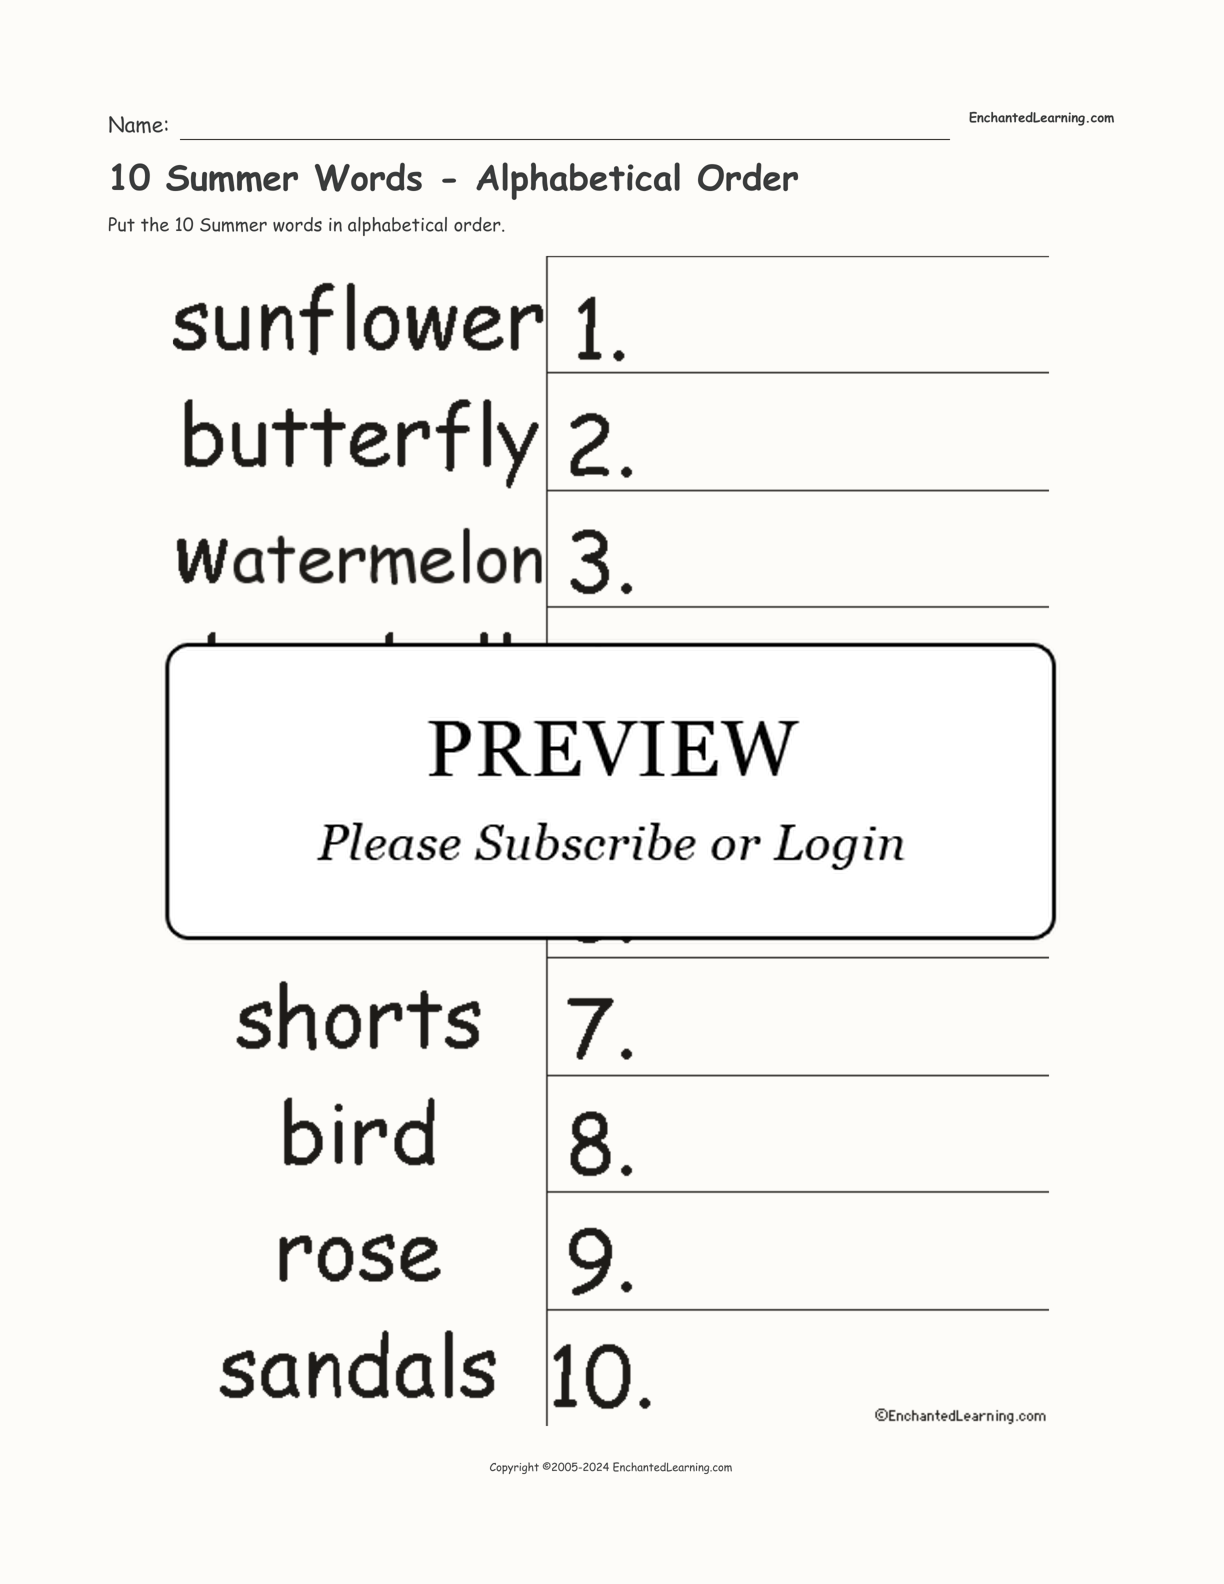 10 Summer Words - Alphabetical Order interactive worksheet page 1